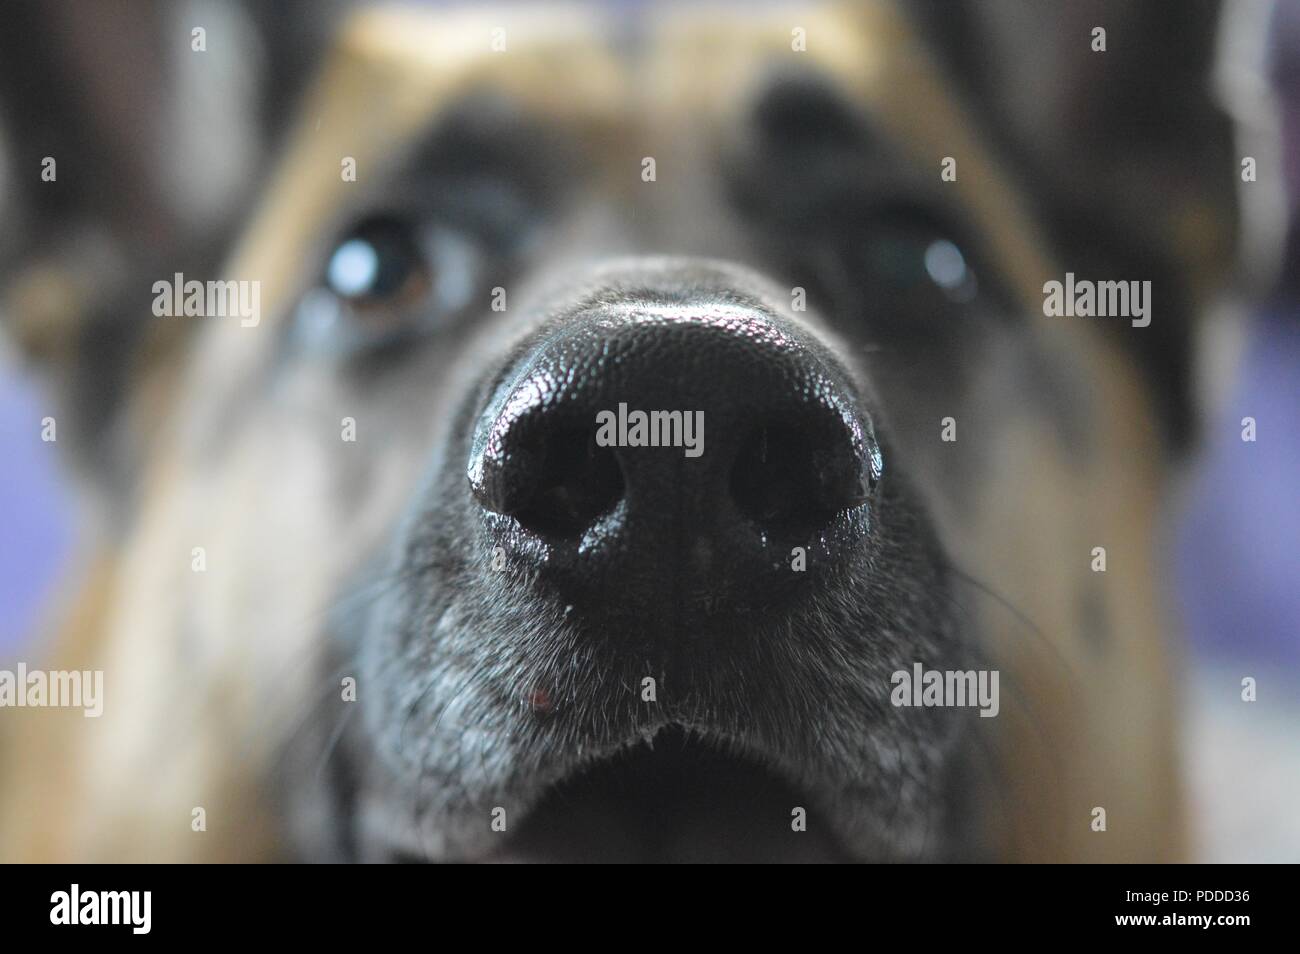 Close up of German Shepherd nose Stock Photo